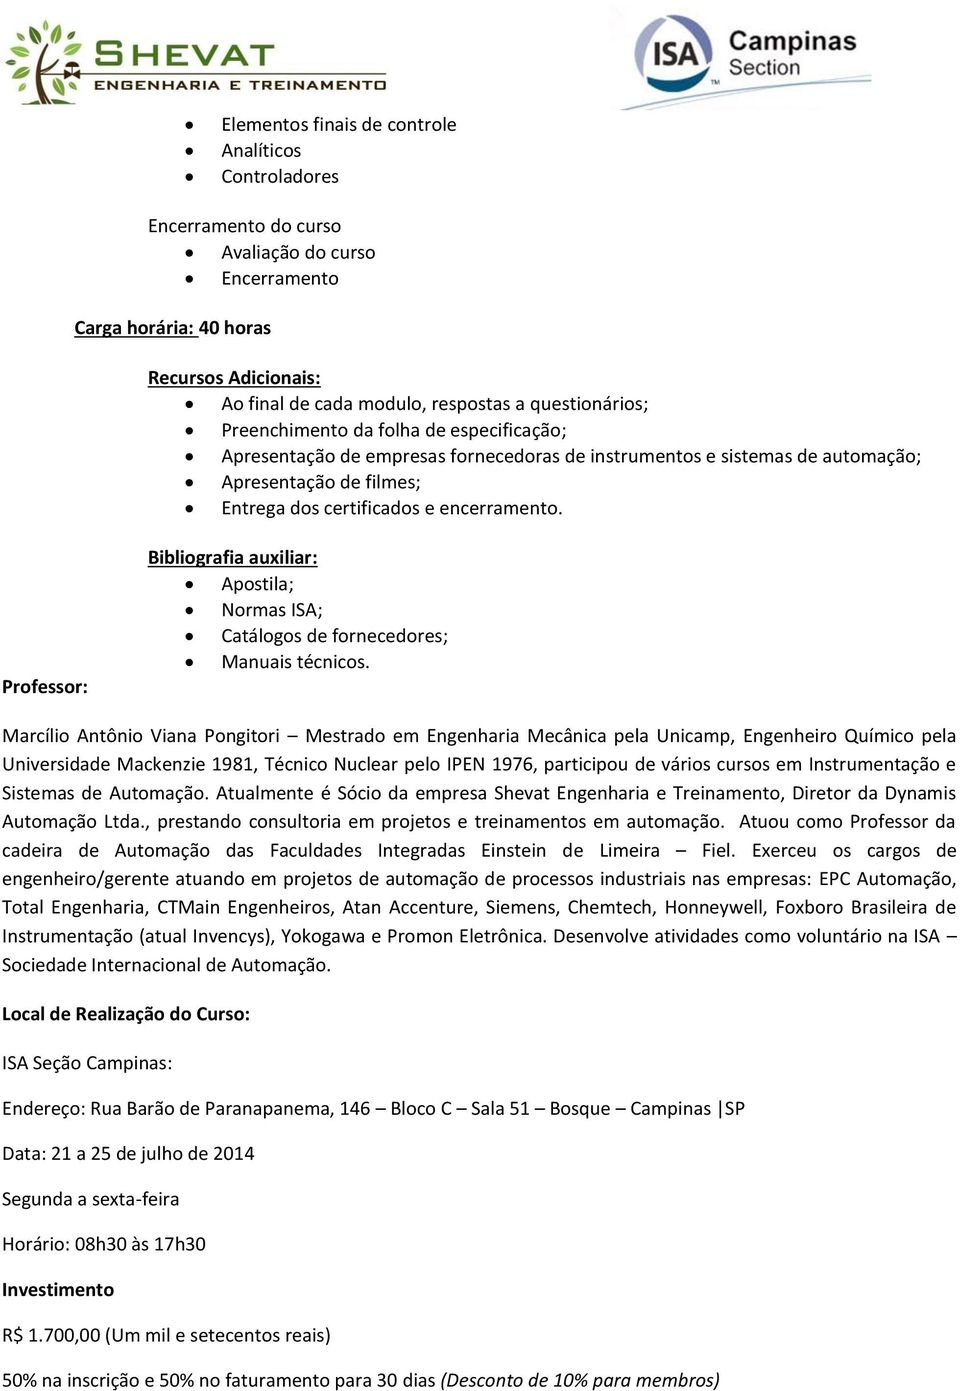 Professor: Bibliografia auxiliar: Apostila; Normas ISA; Catálogos de fornecedores; Manuais técnicos.